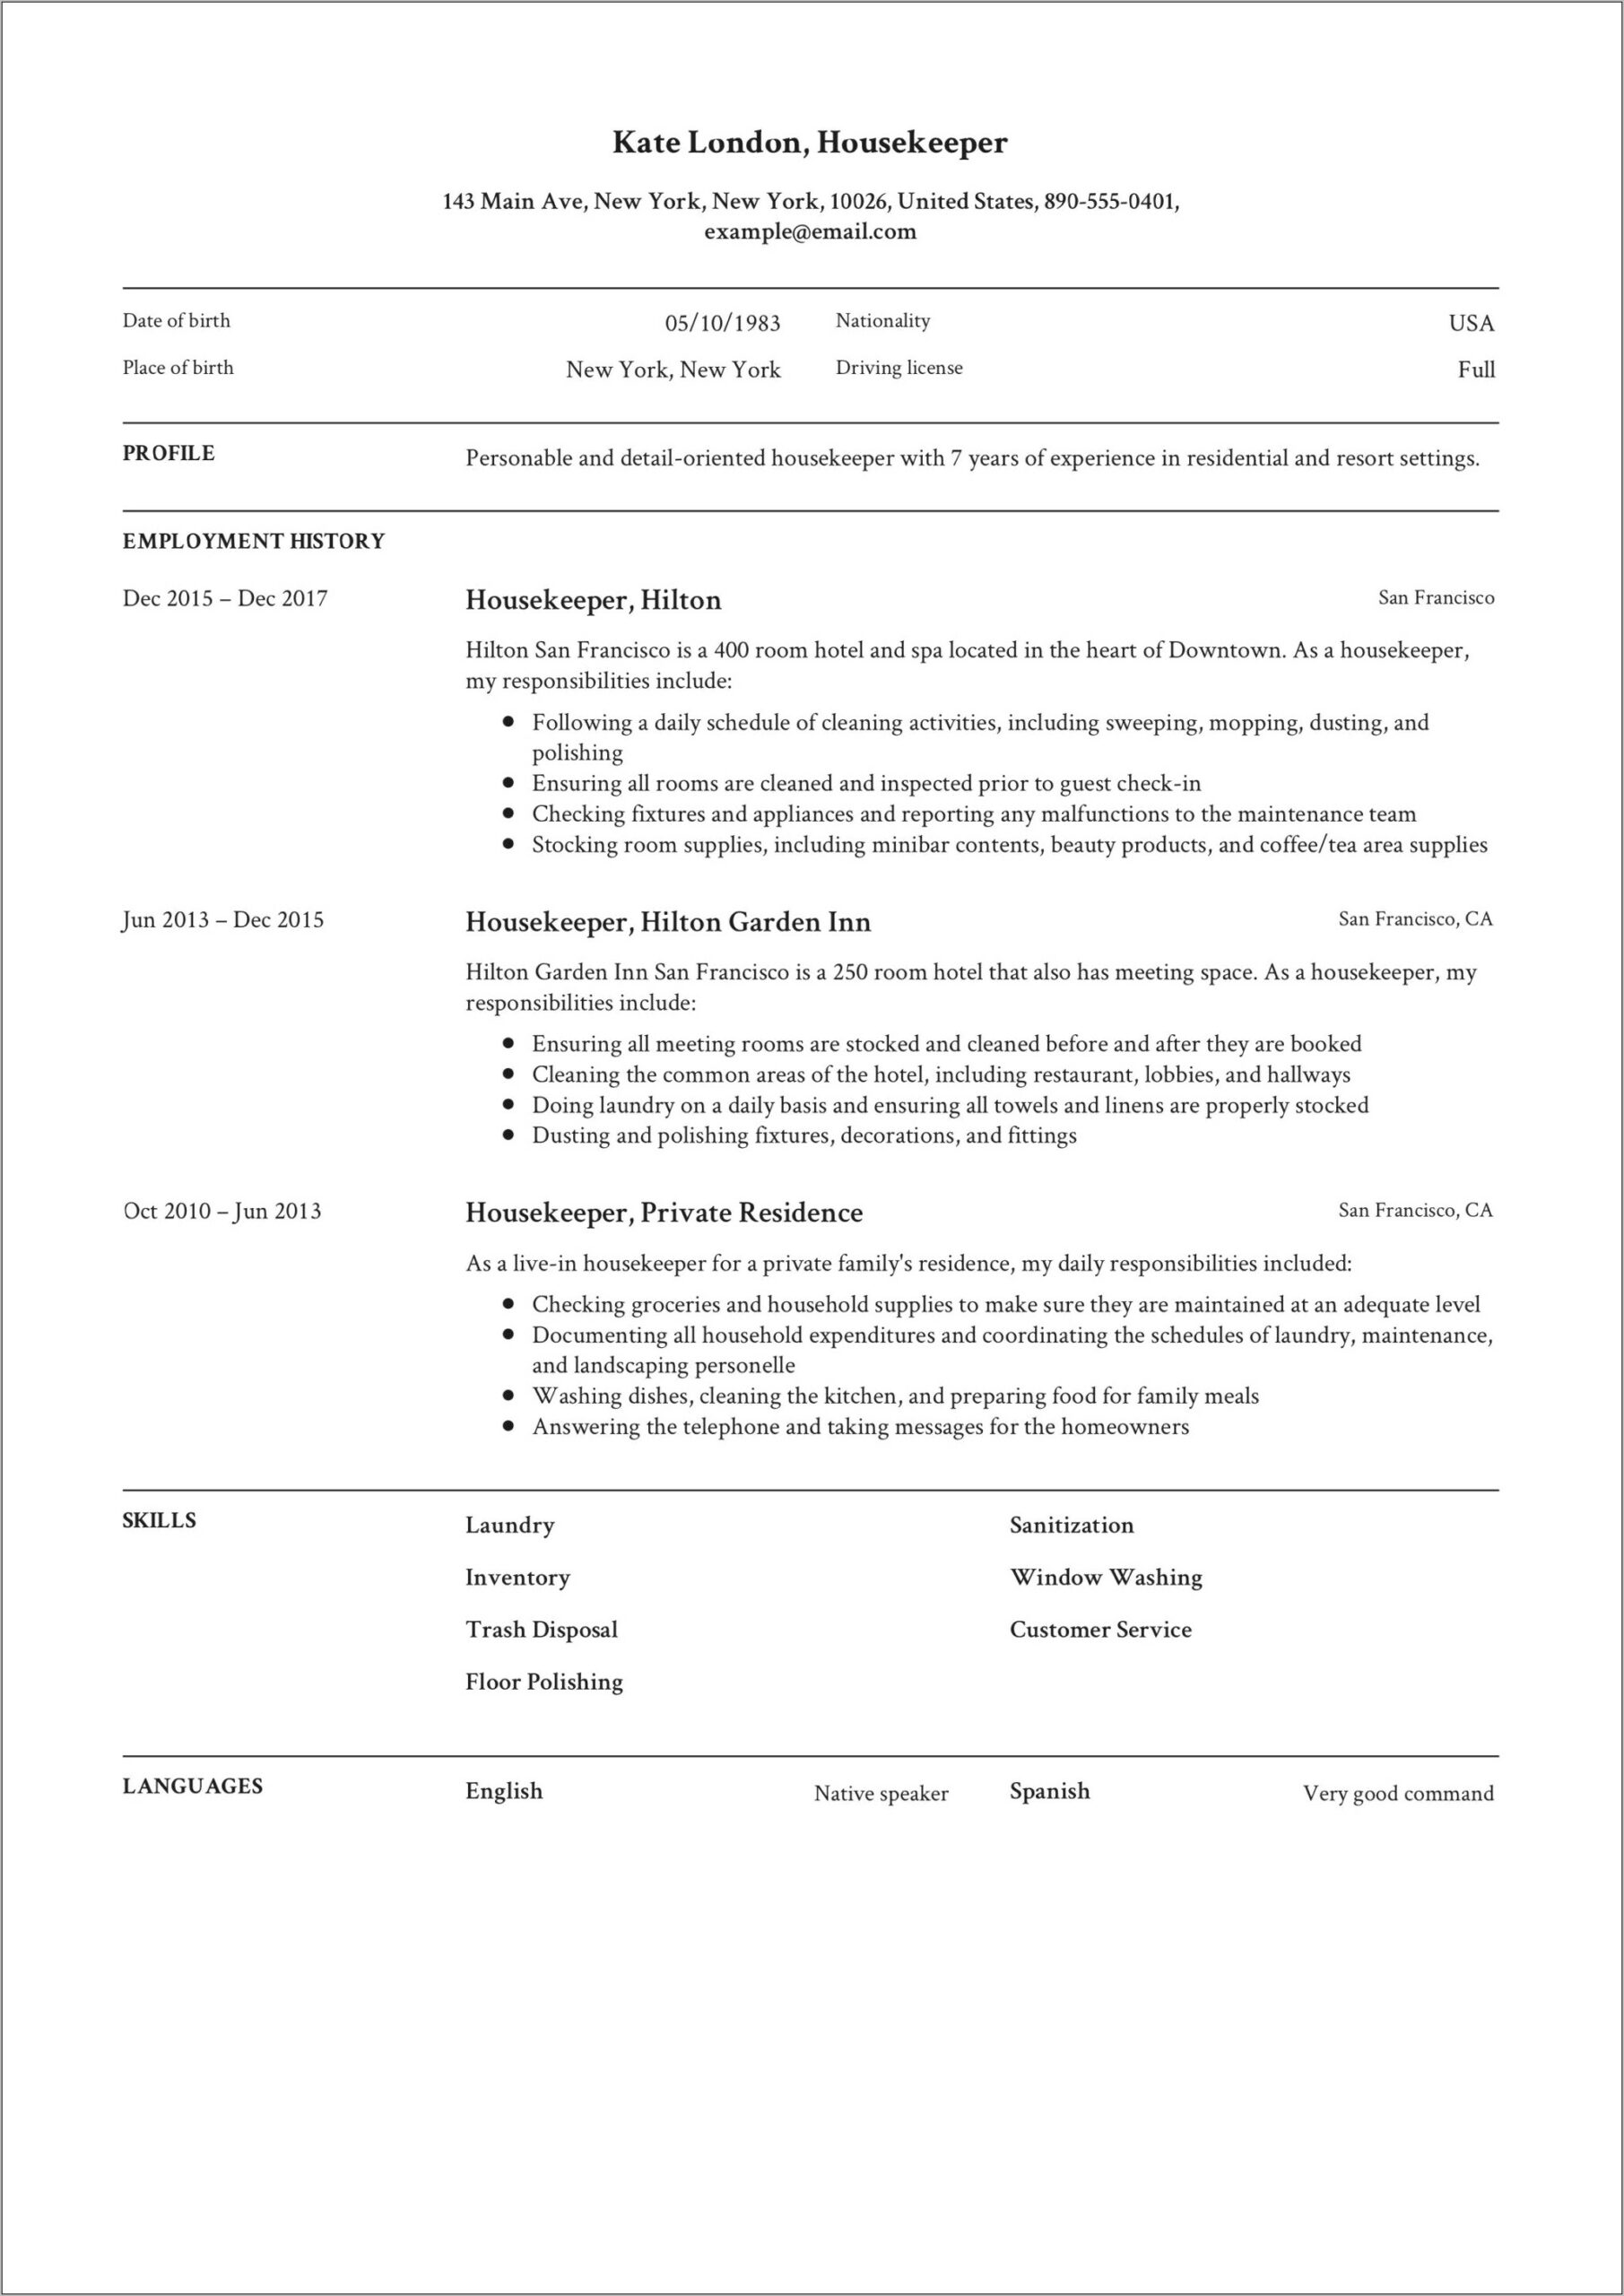 Housekeeping Job Summary For Resume